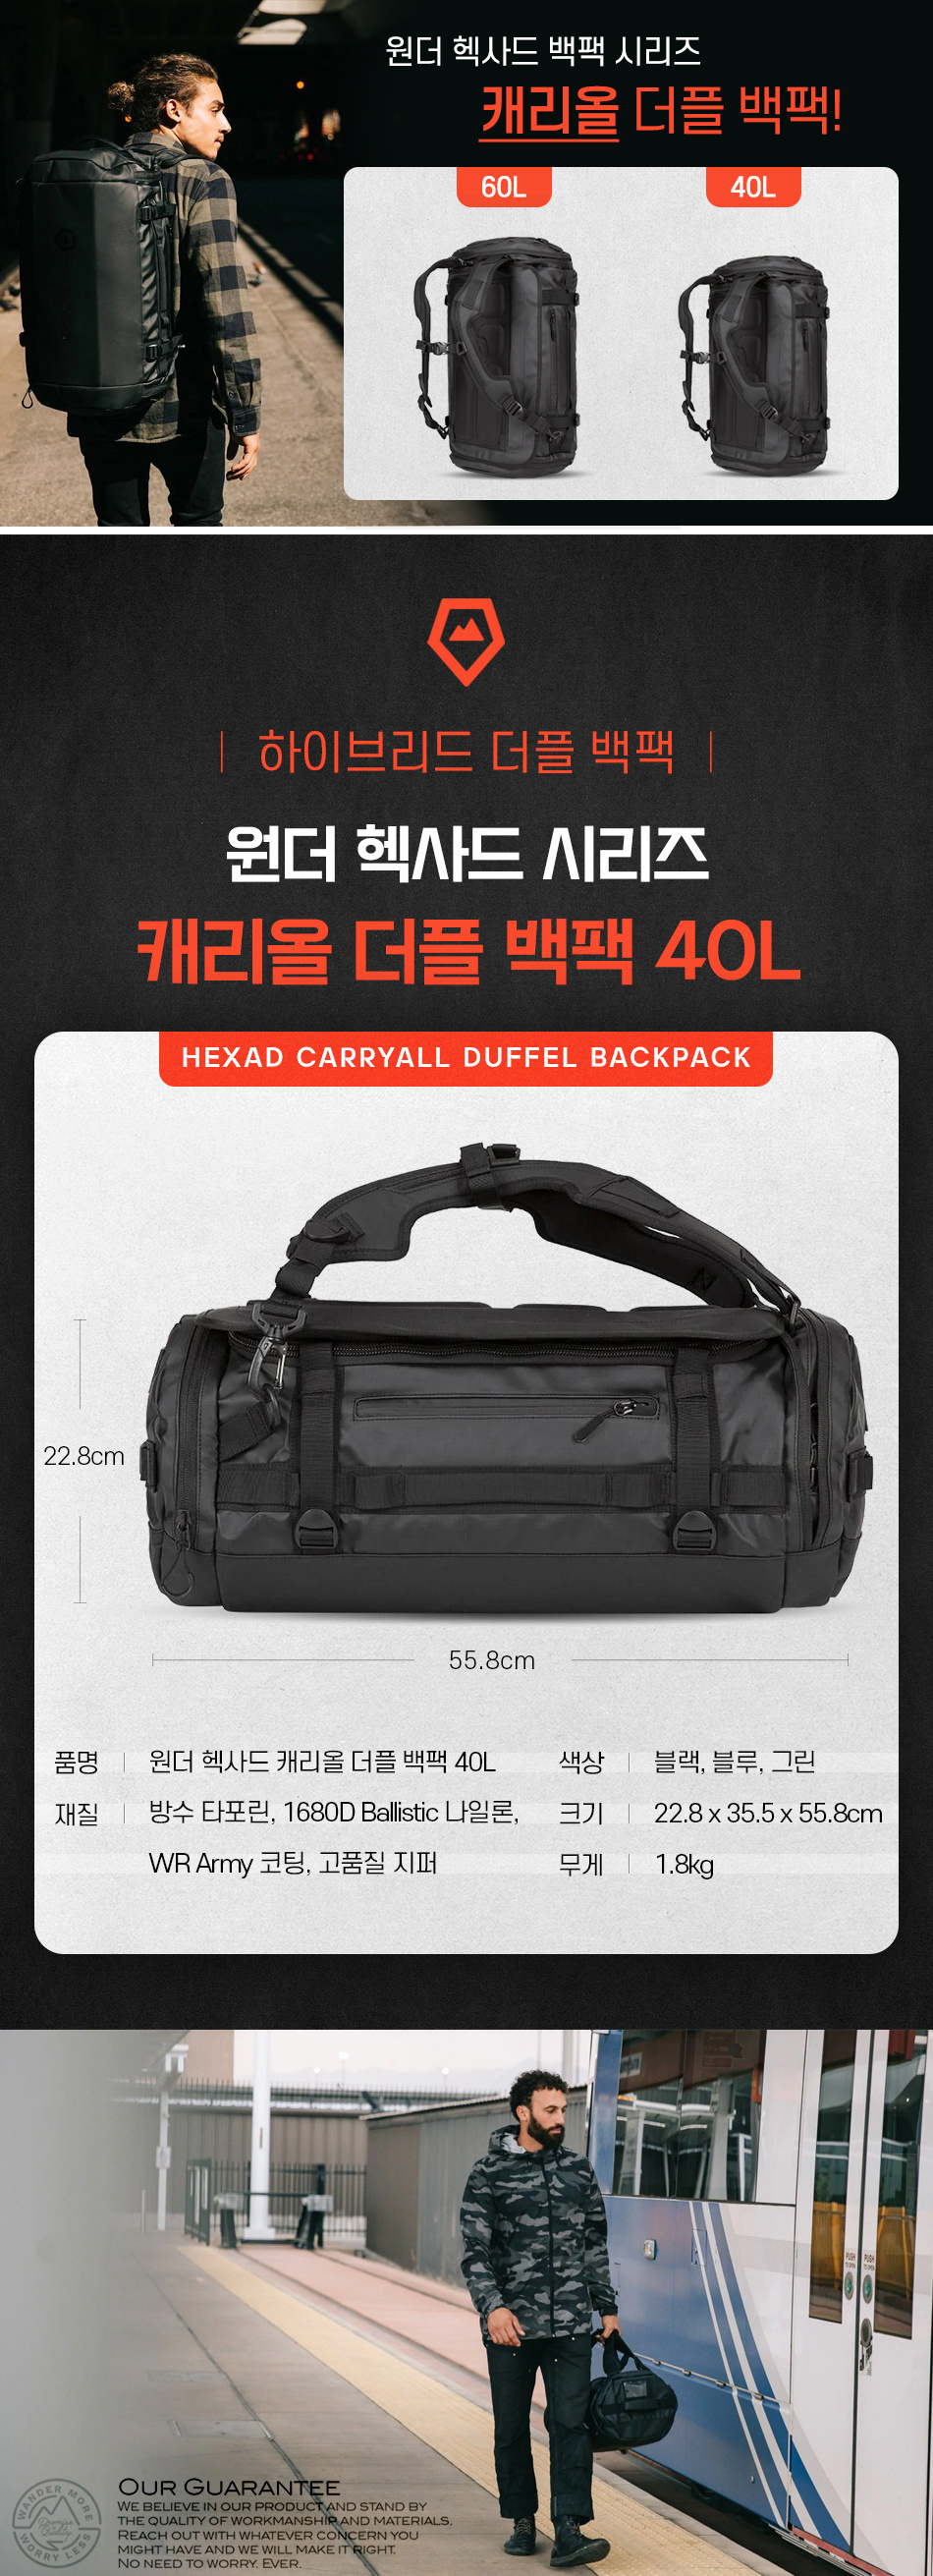 carryall_duffel_backpack_40l_01.jpg